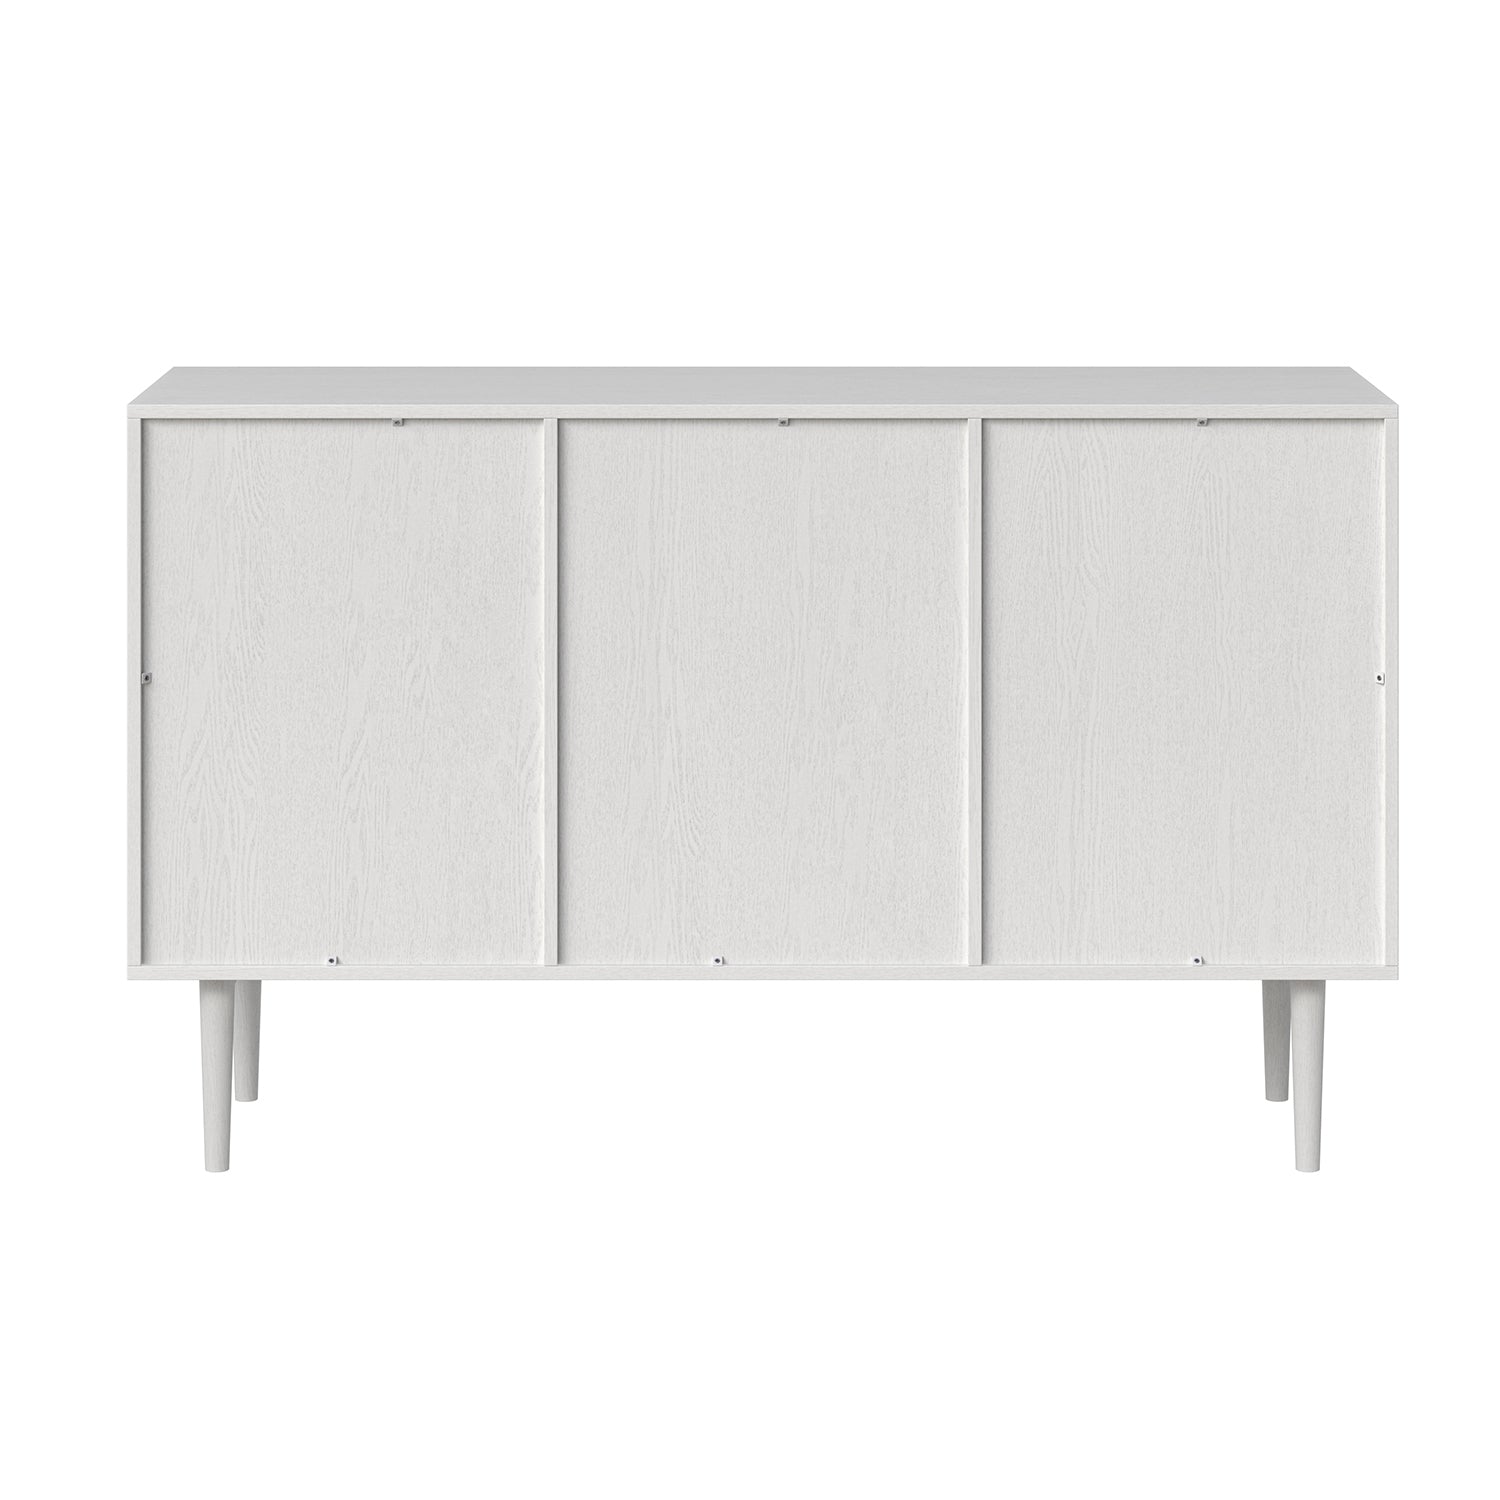 Hercli 54'' Wide Sideboard White - White Mdf